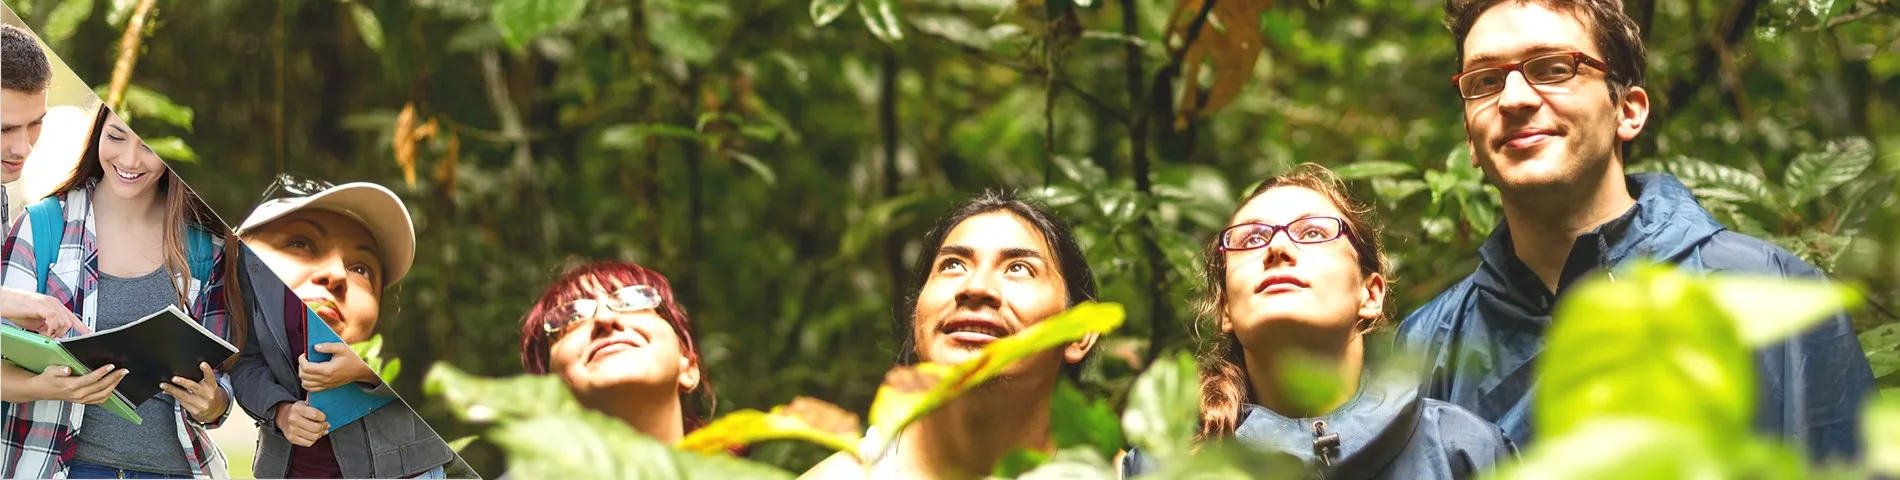 Selva amazònica - Aula viatjant